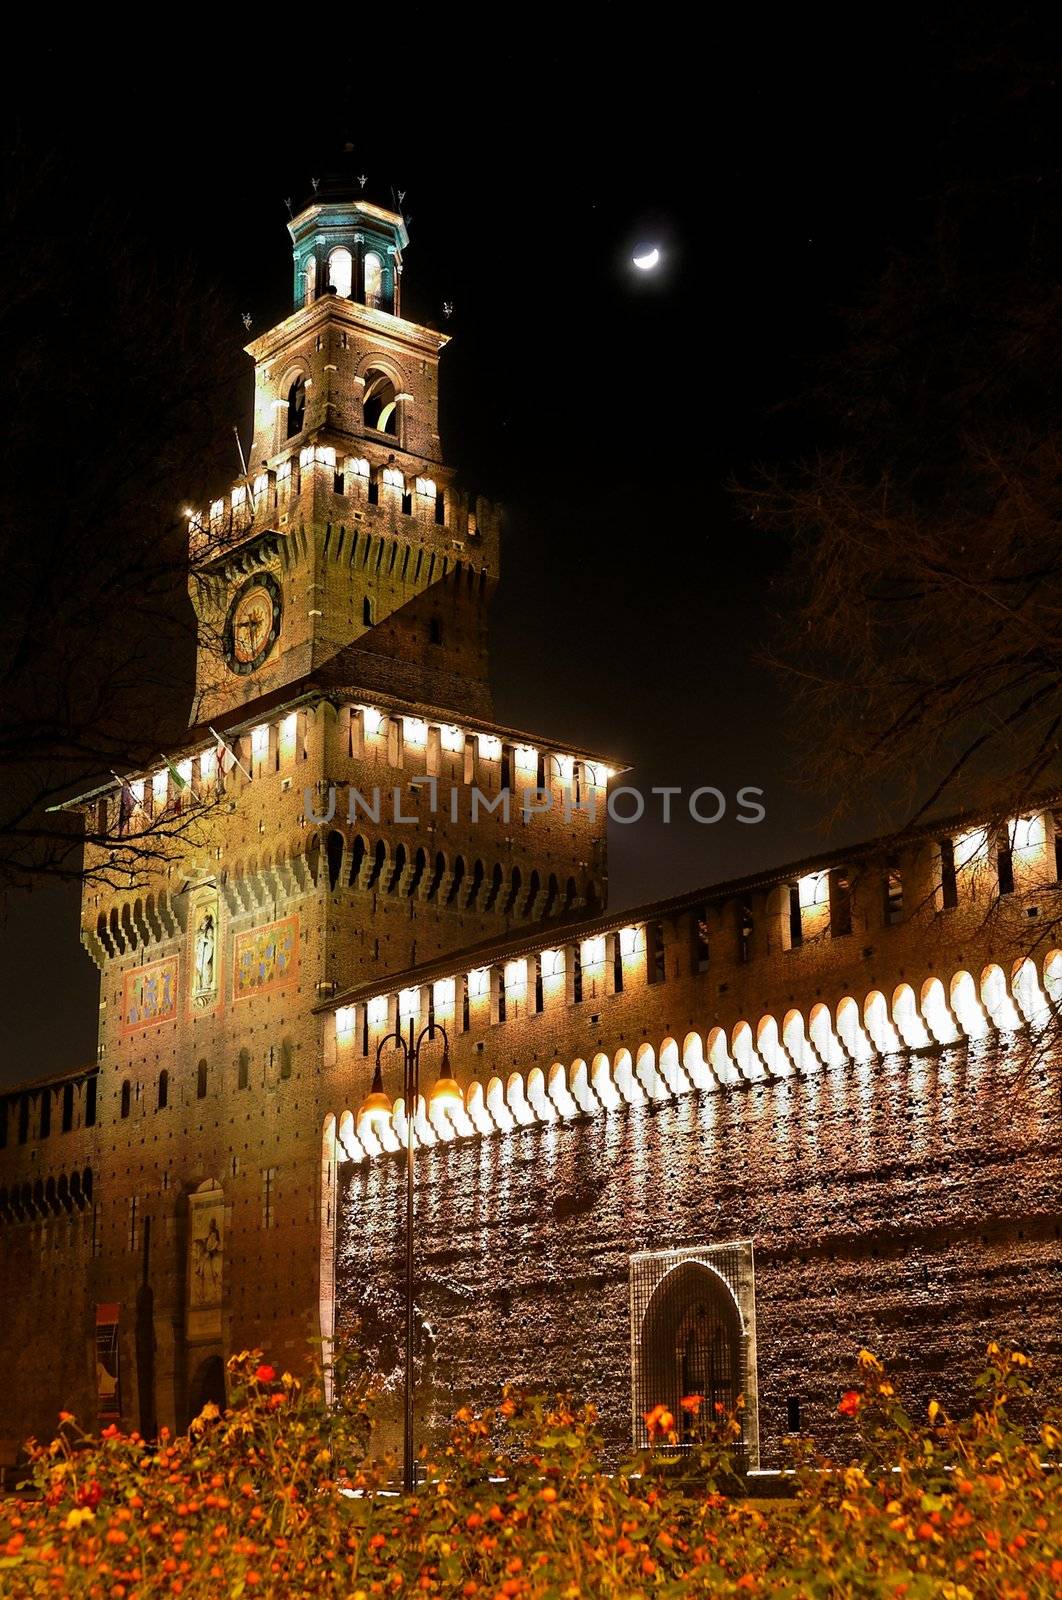 mediaeval castle at night - Castello Sforzesco Milan Italy by Laborer